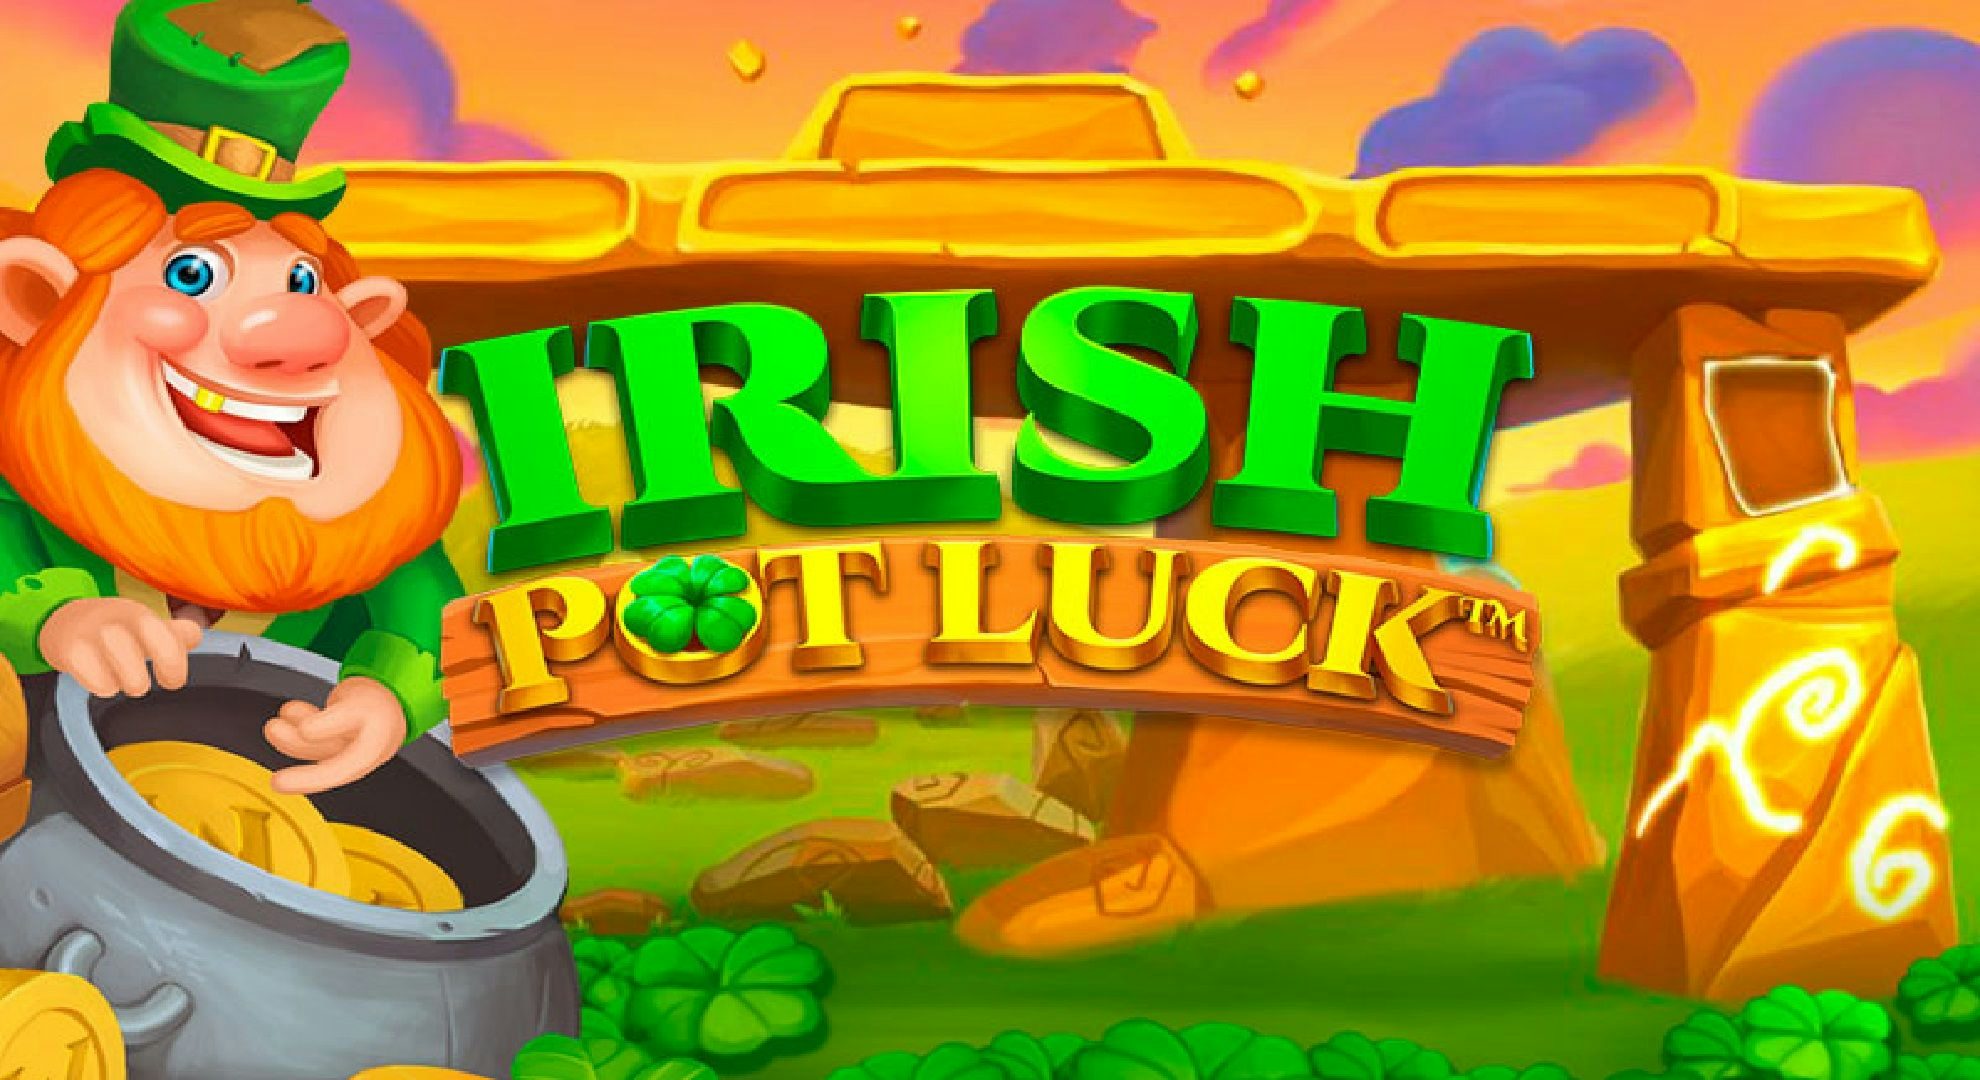 IRISH POT LUCK